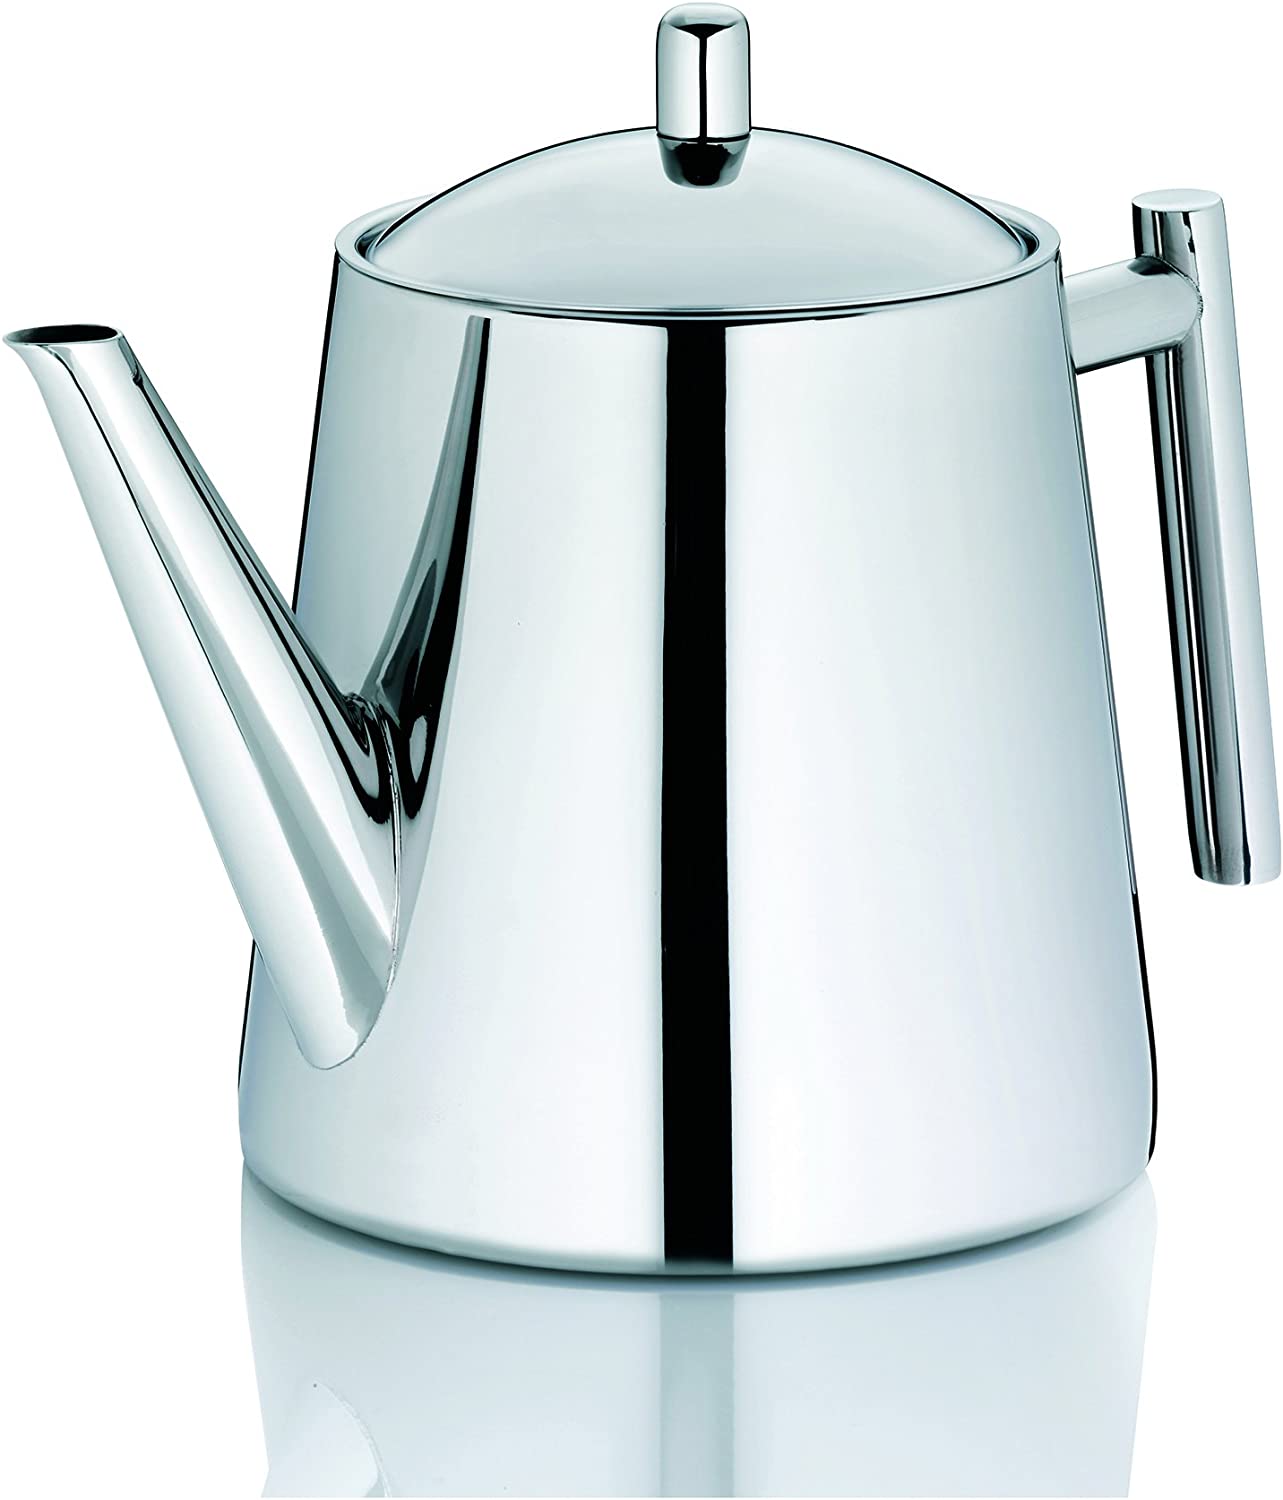 Kela Ancona 11356 Teapot with Tea Strainer Shiny 18/10 Stainless Steel 1.7 L Capacity